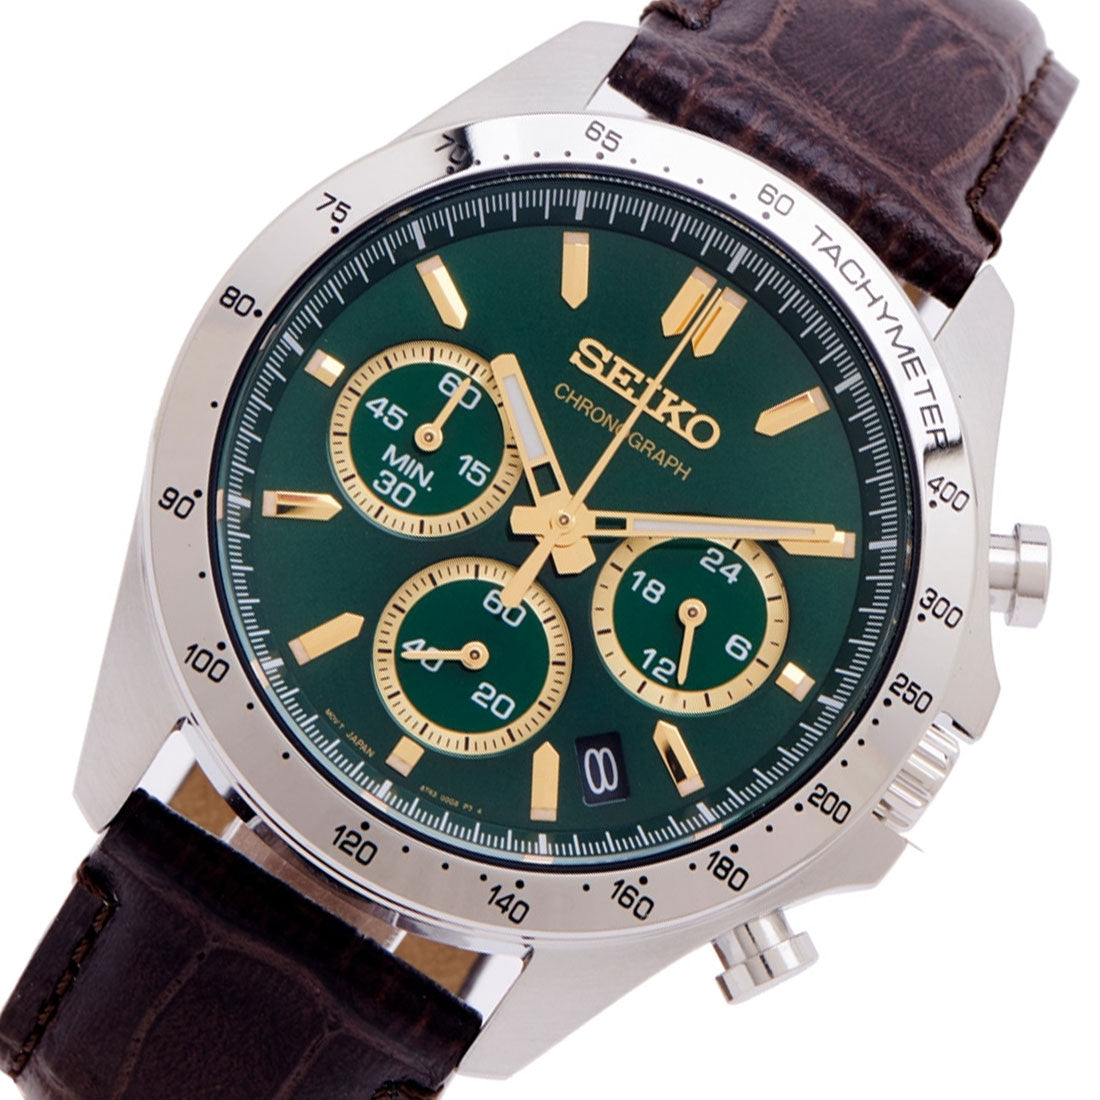 Seiko Spirit SBTR017 Chronograph Green Dial Leather JDM Watch